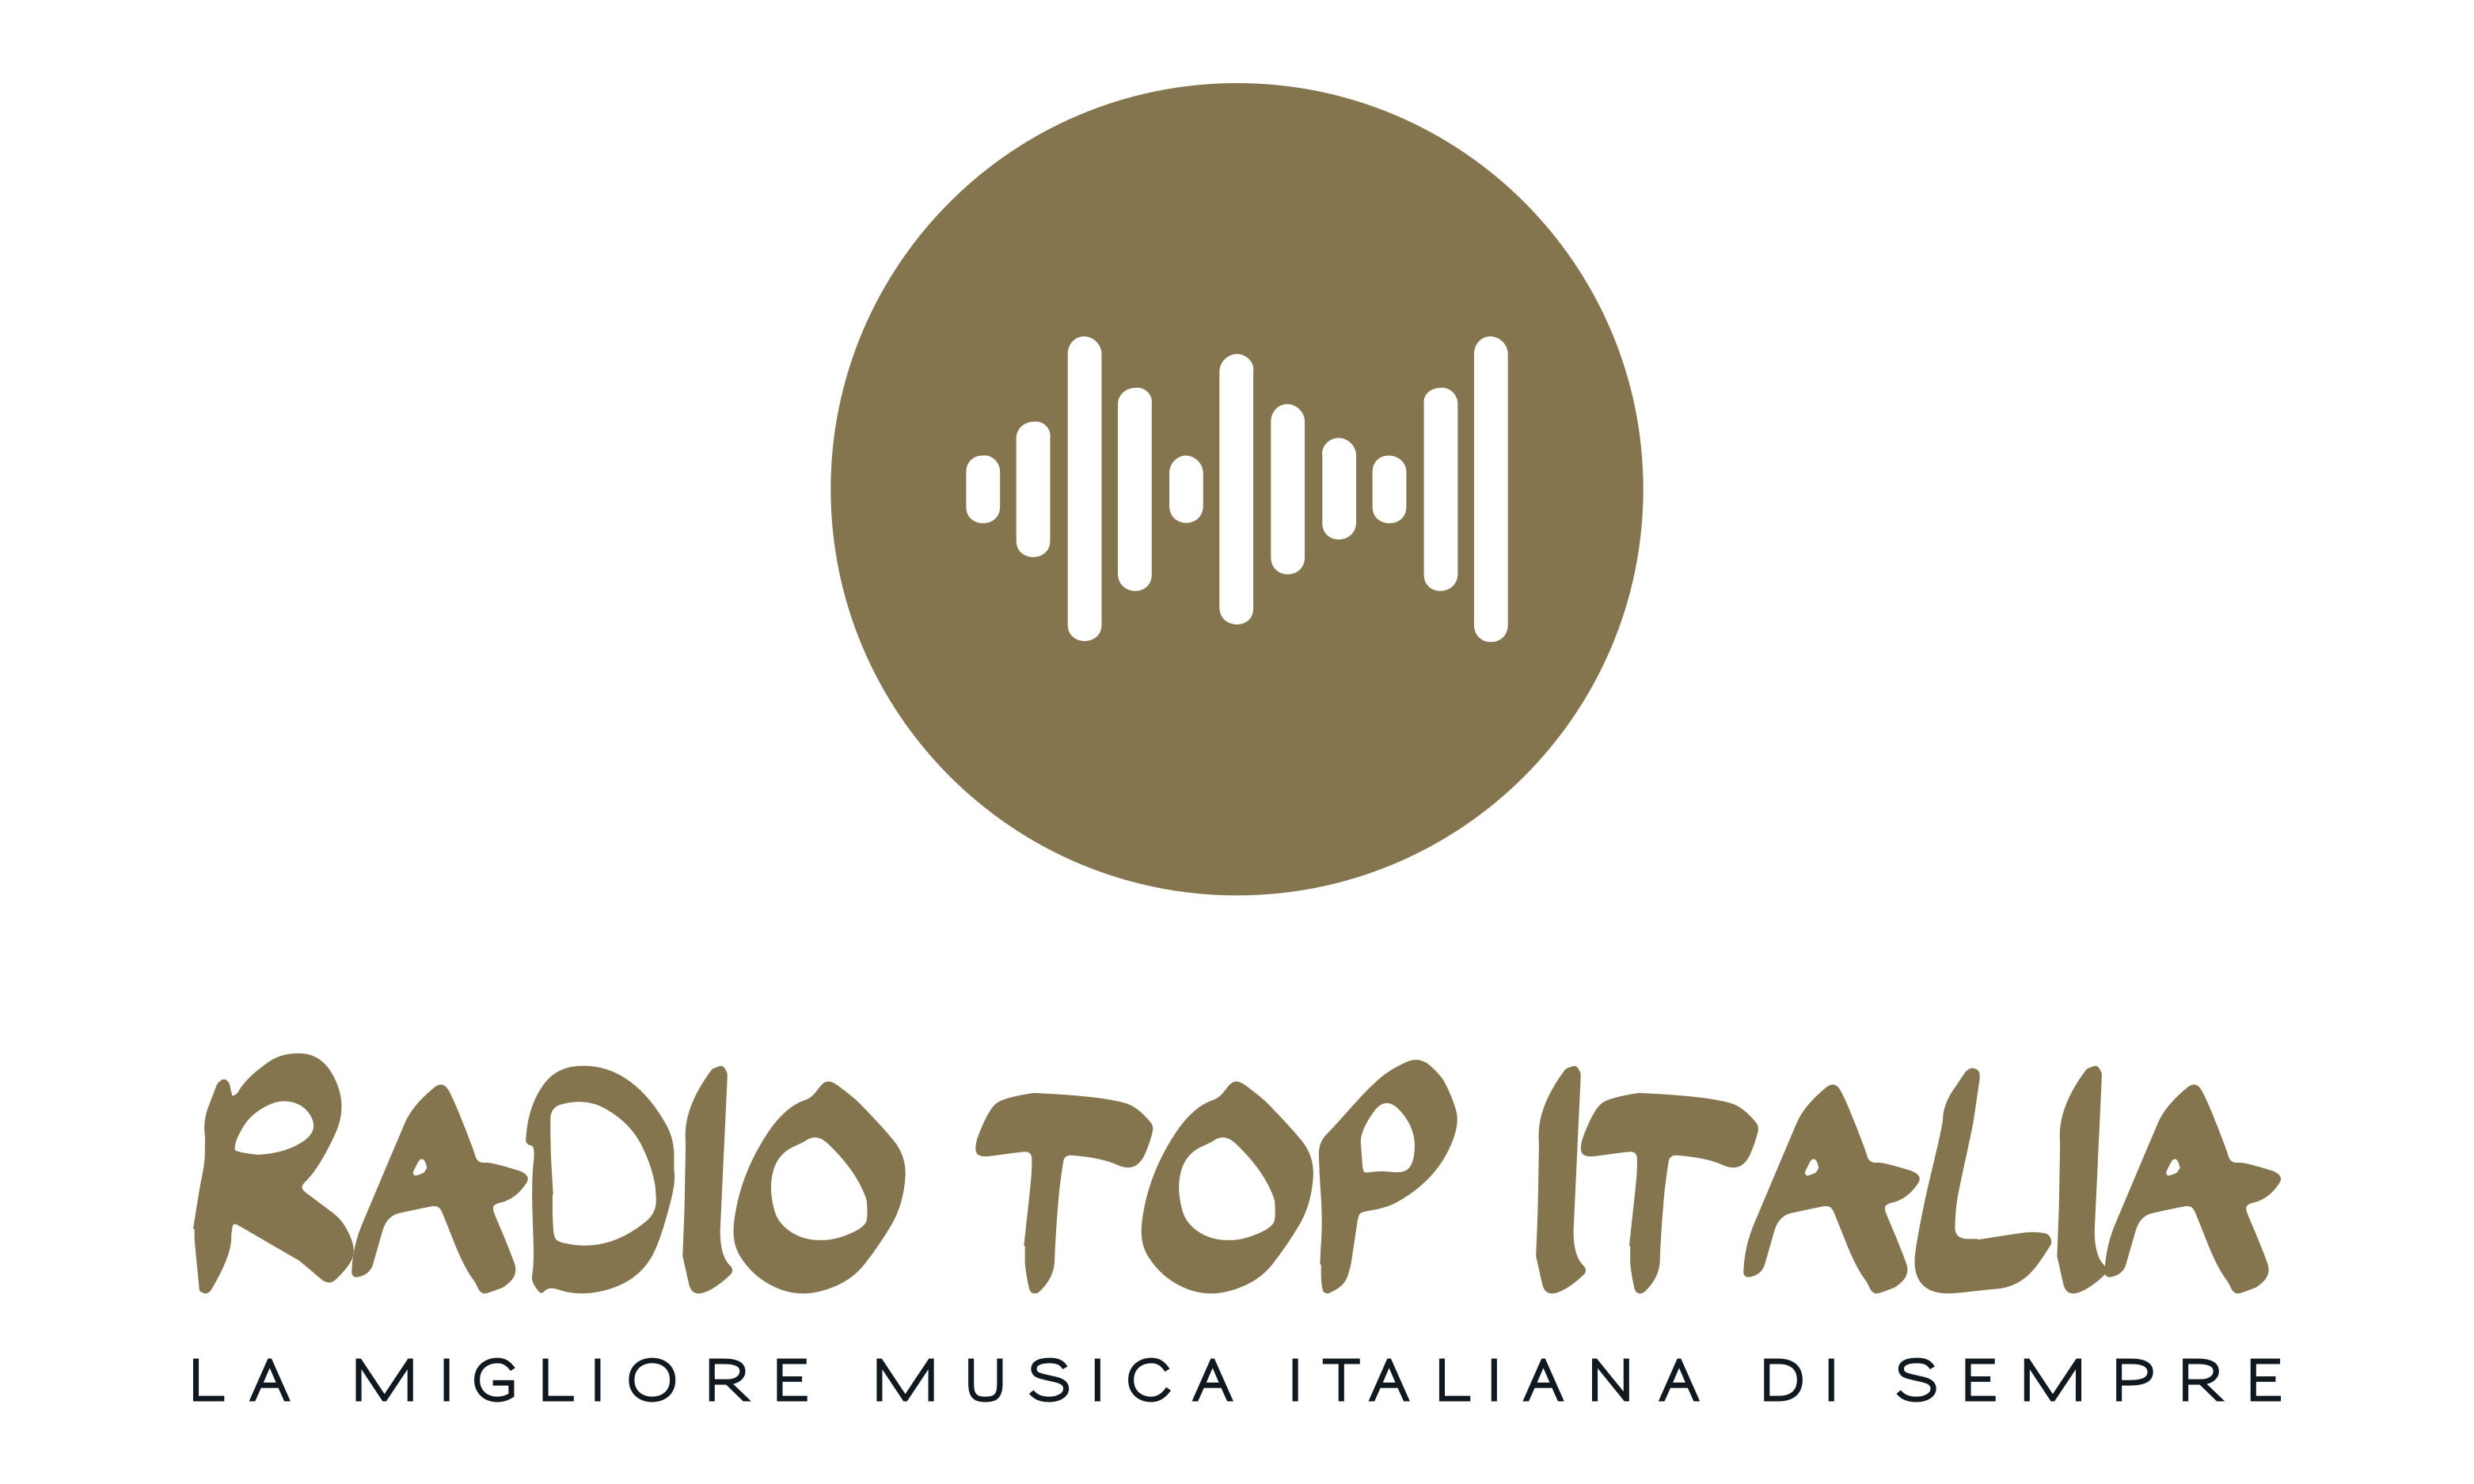 www.radiotopitalia.it